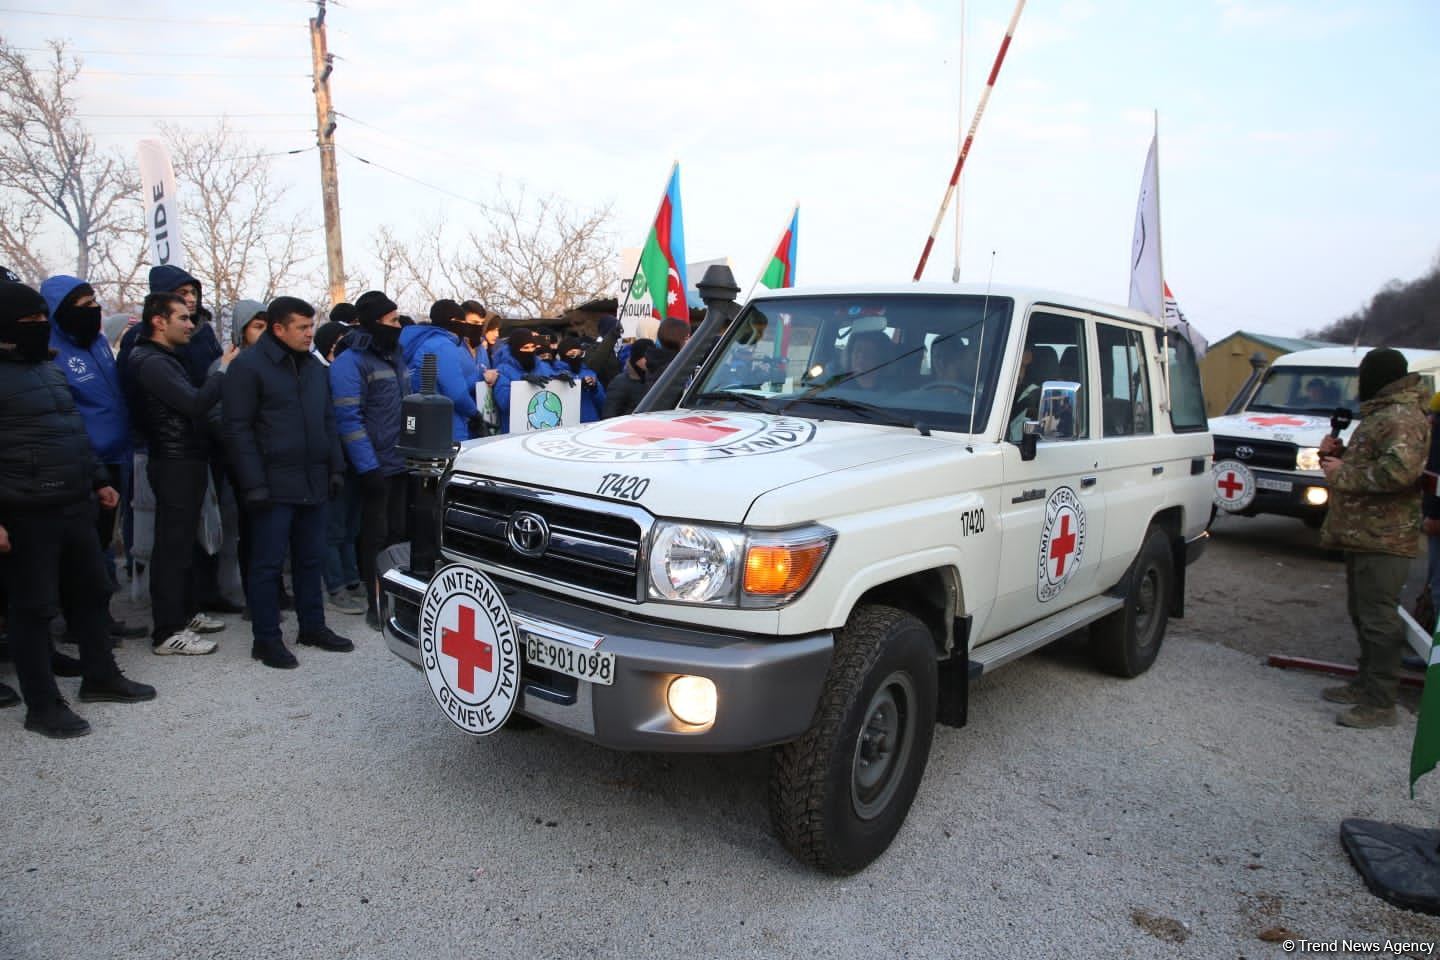 ICRC cars freely pass along Azerbaijan's Lachin road (PHOTO/VIDEO)